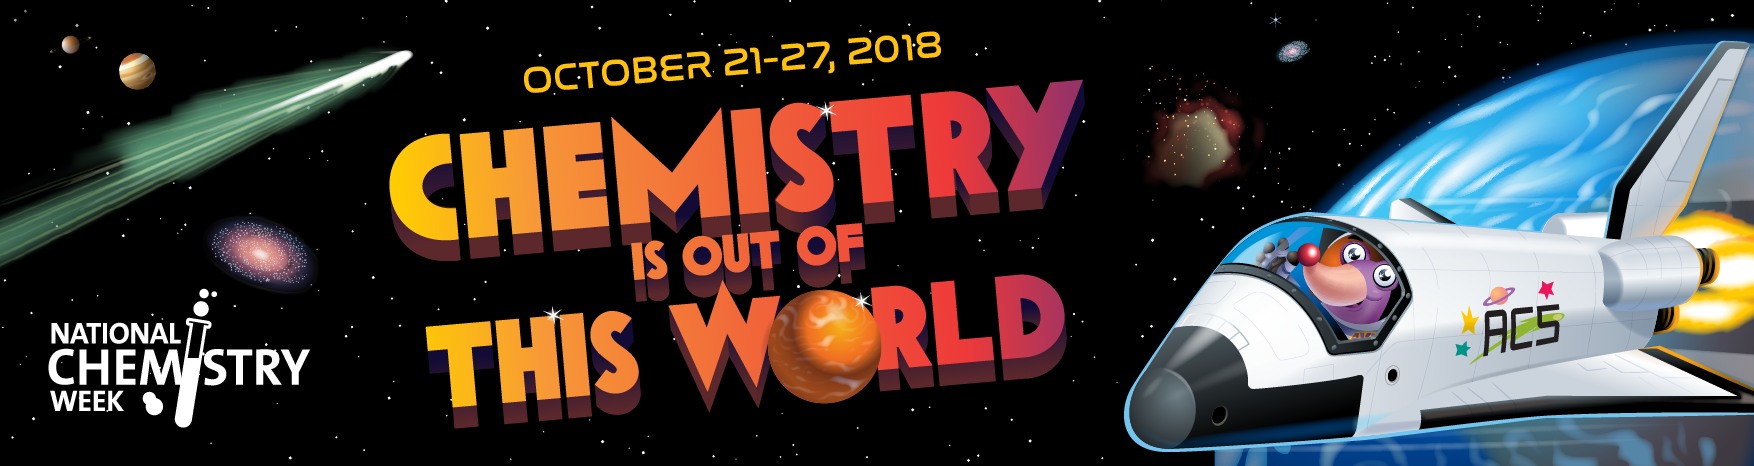 National Chemistry Week 2018 banner